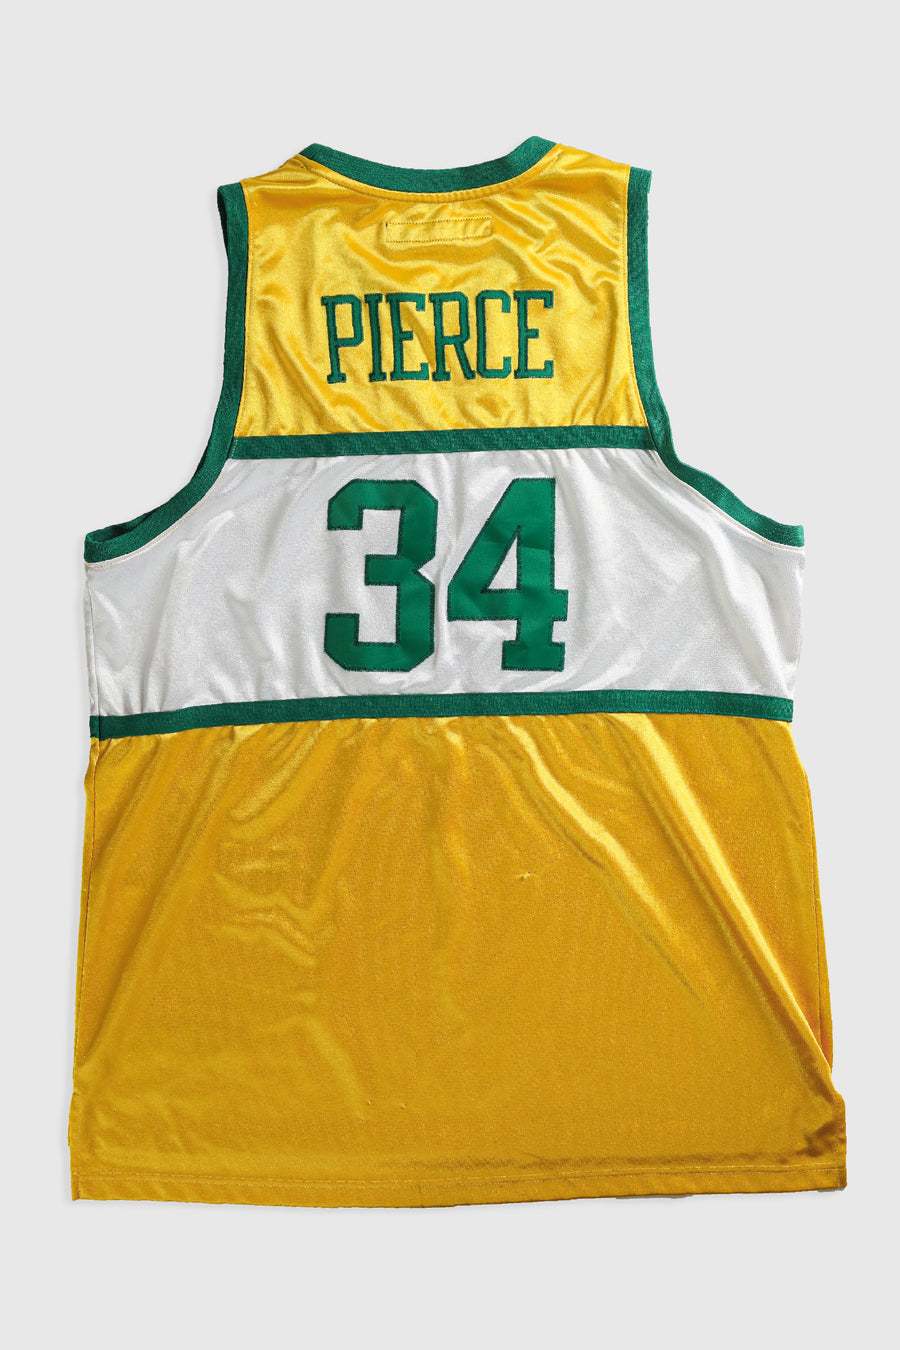 Vintage Celtics NBA Jersey